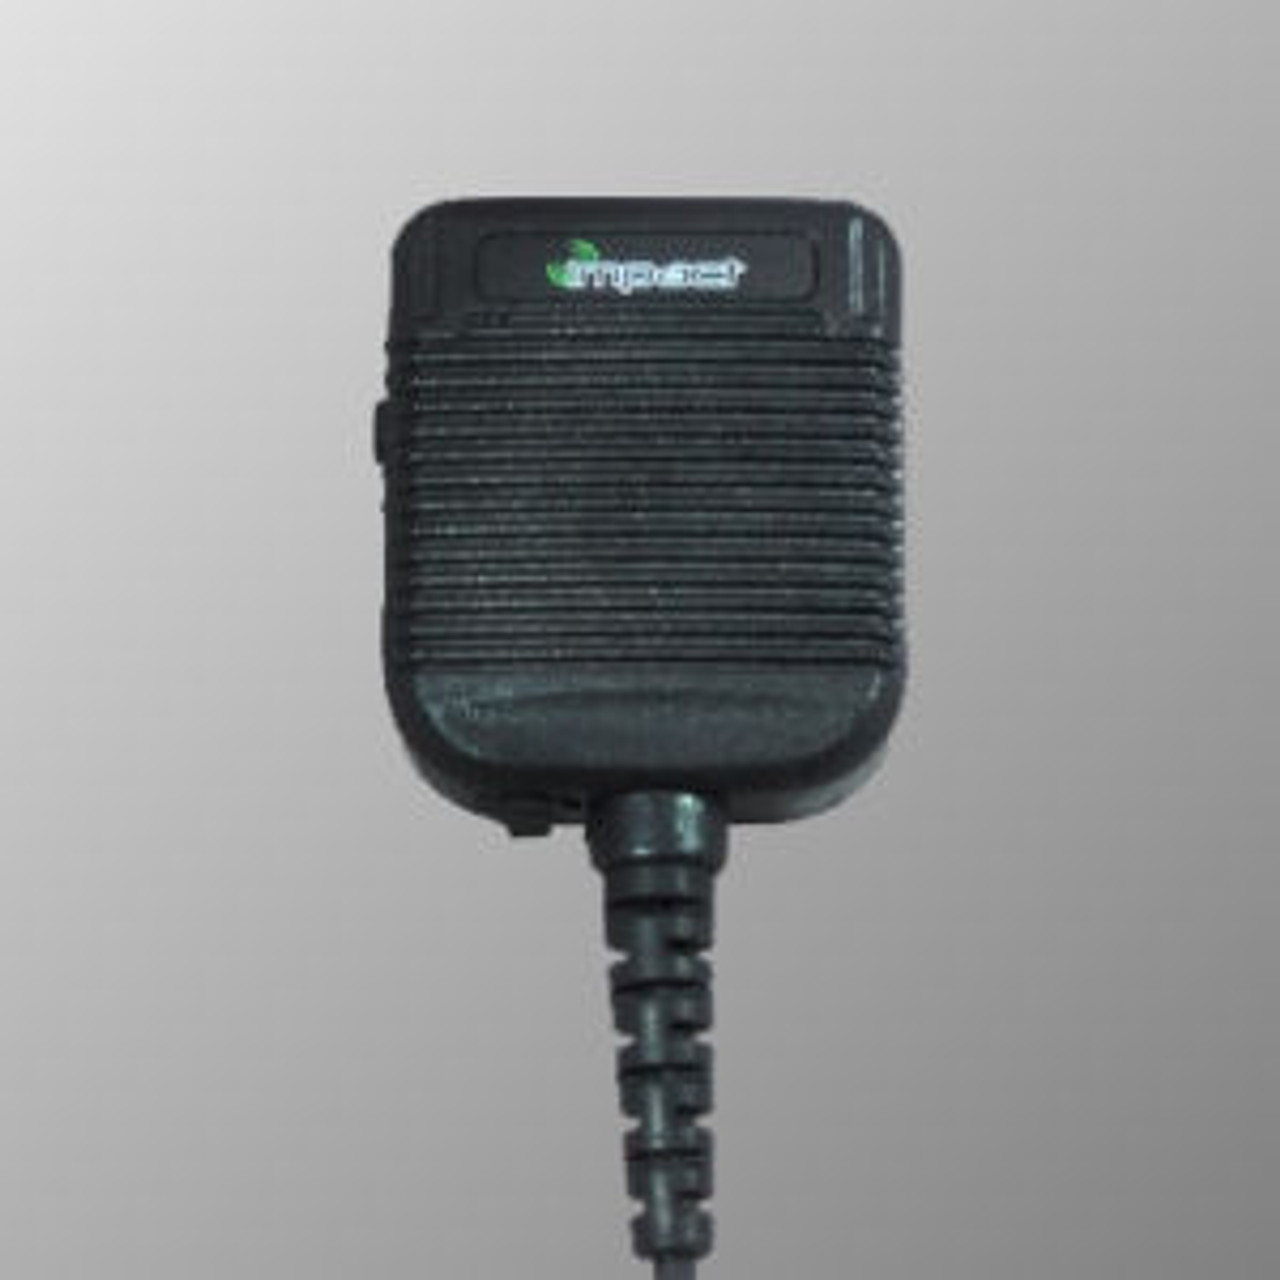 M/A-Com P7230 IP67 Ruggedized Speaker Mic.